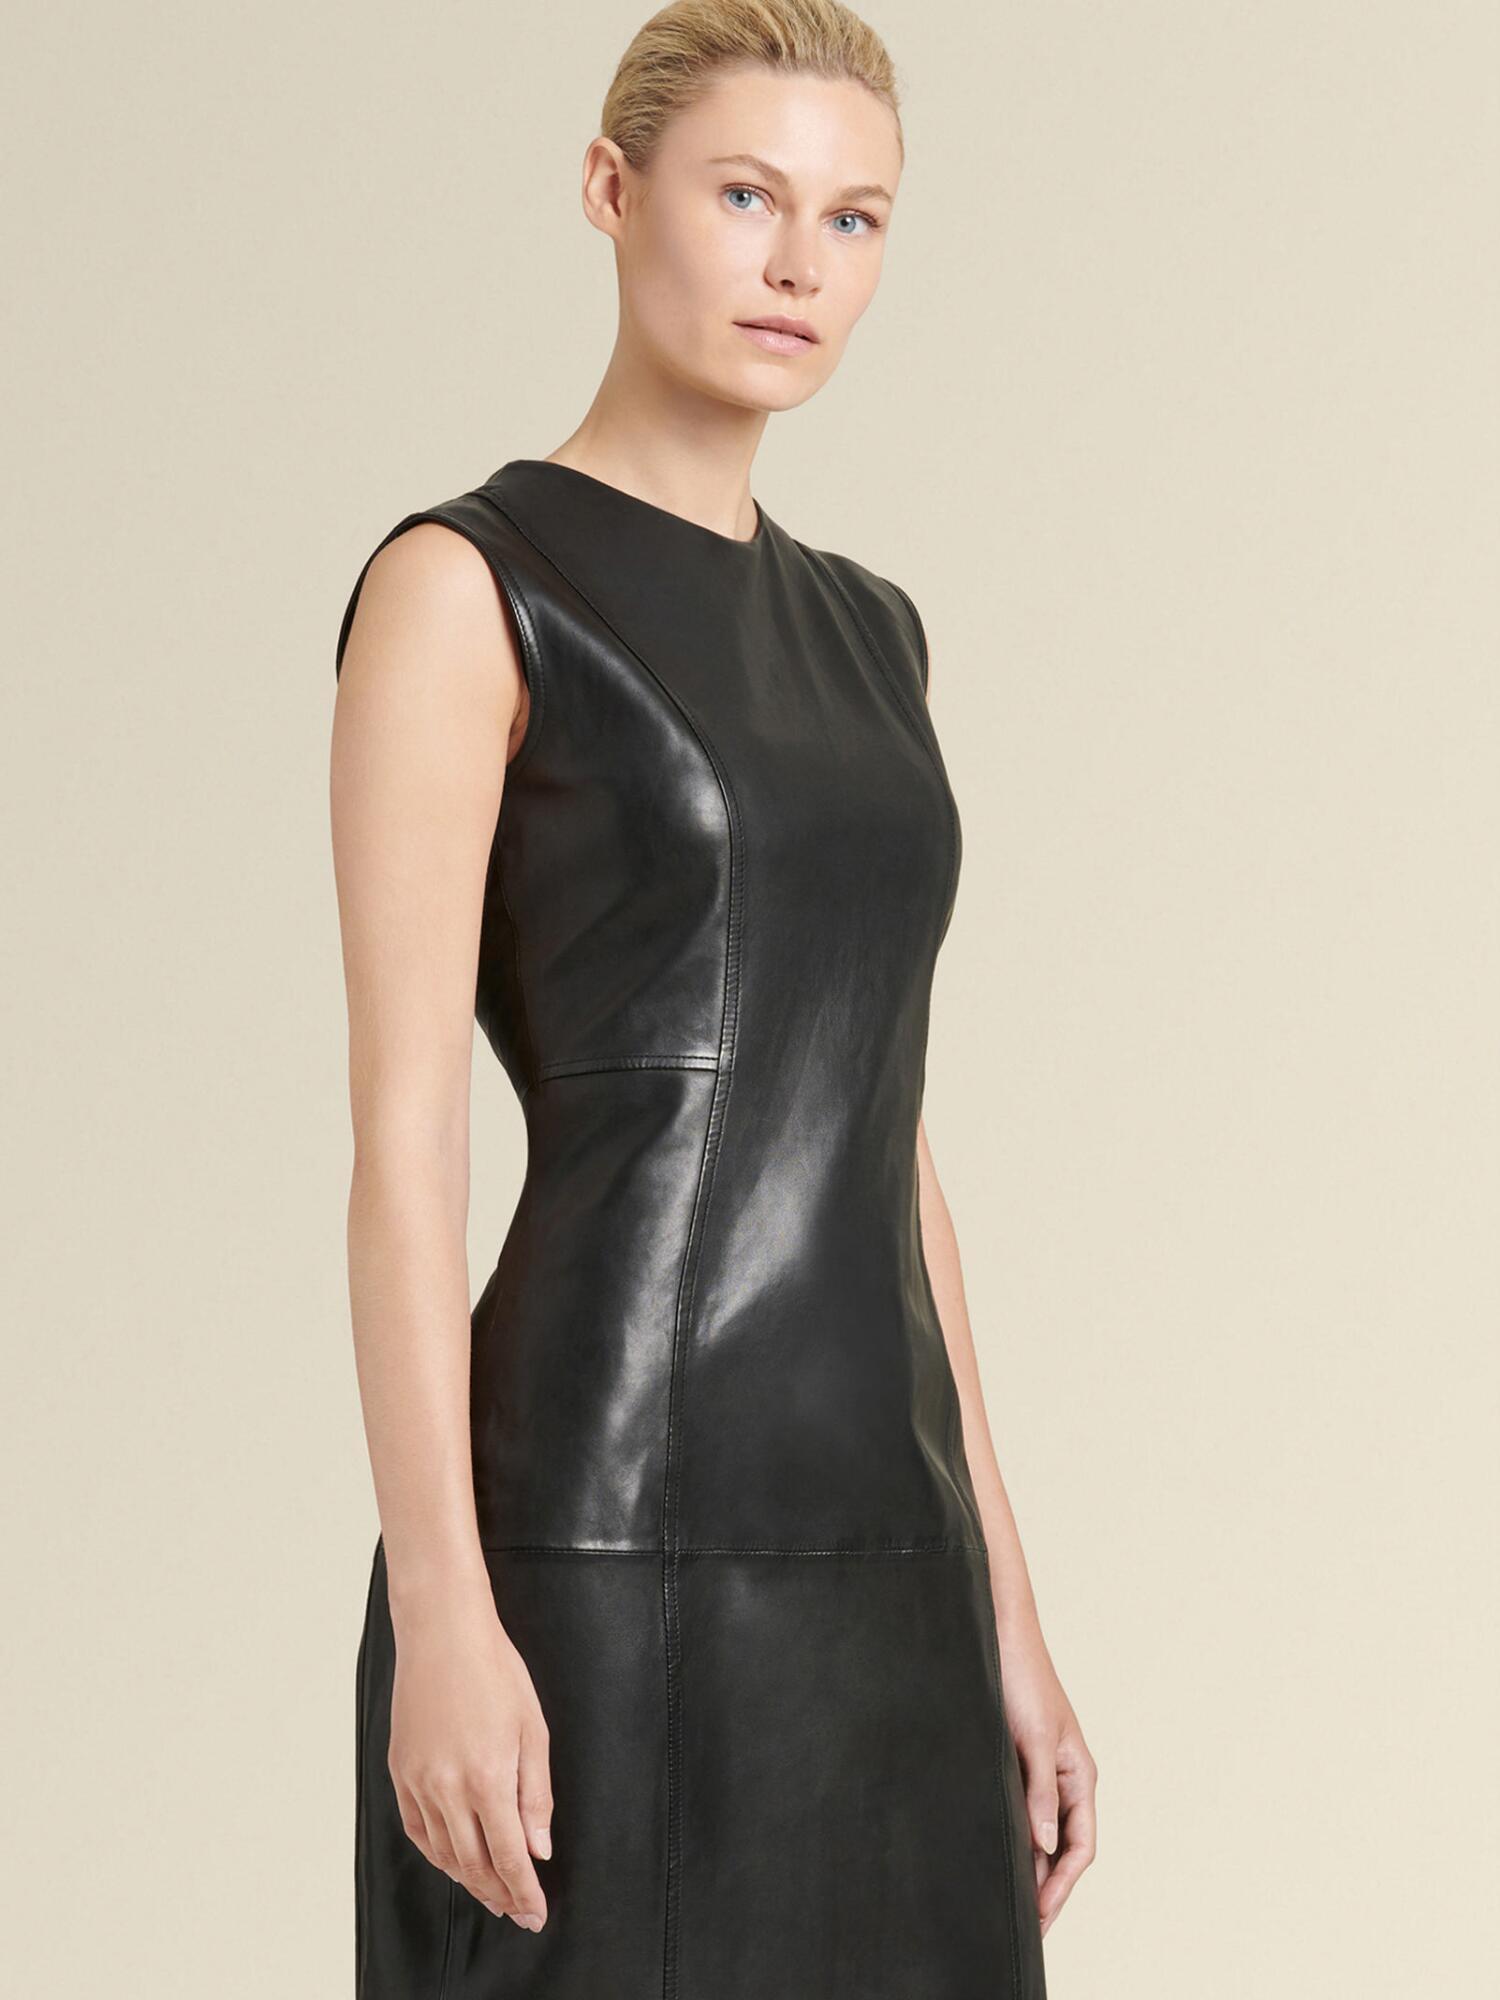 DKNY Donna Karan Sleeveless Leather ...